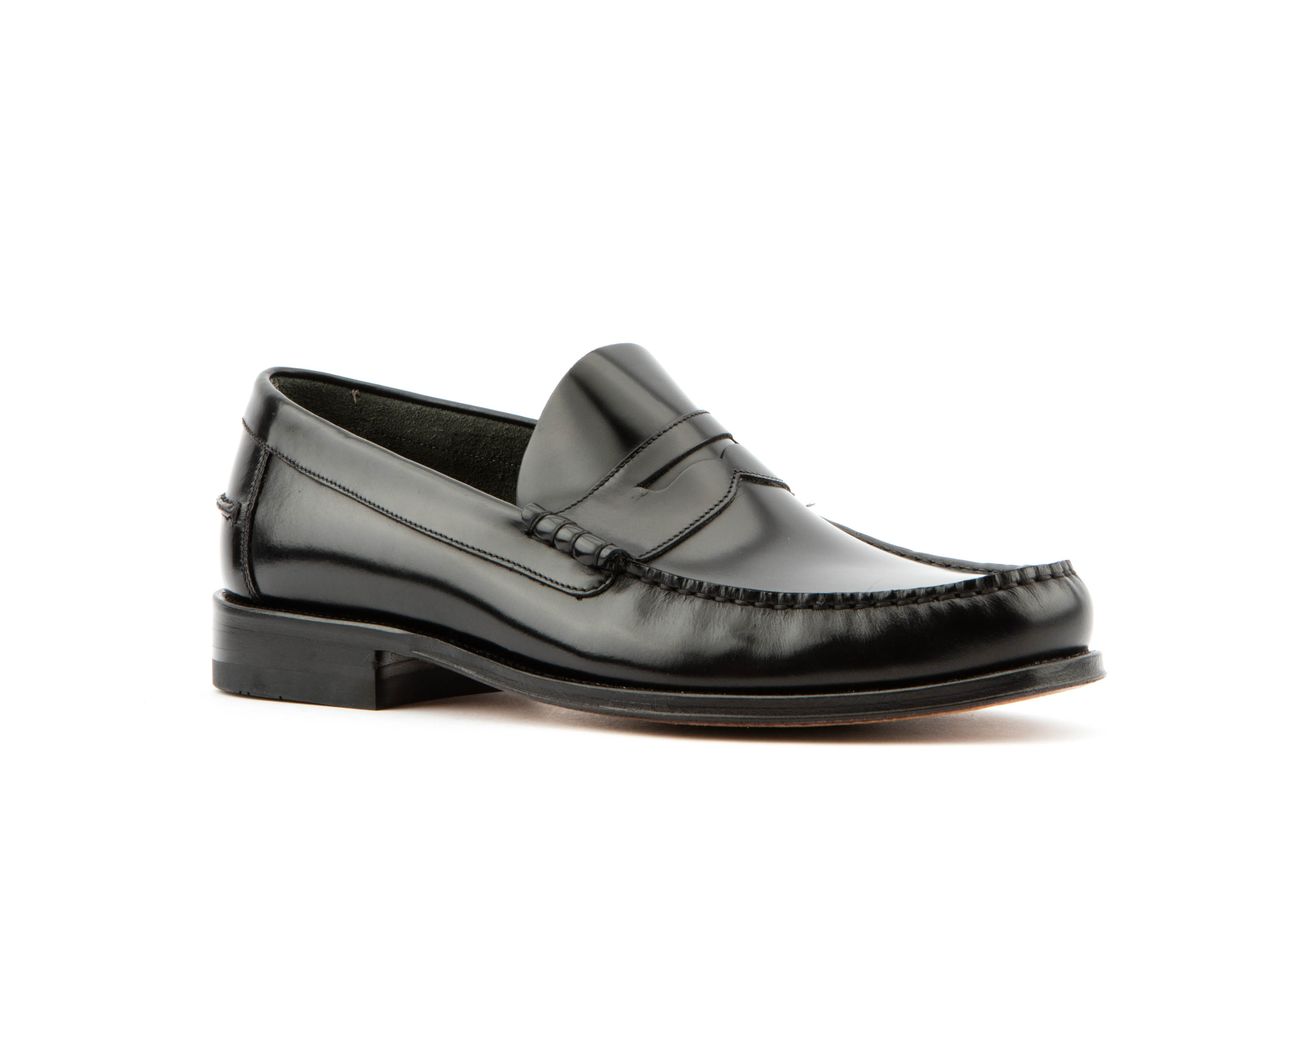 Men's LOAKE Princeton Polished Leather Moccasin Shoes - Black